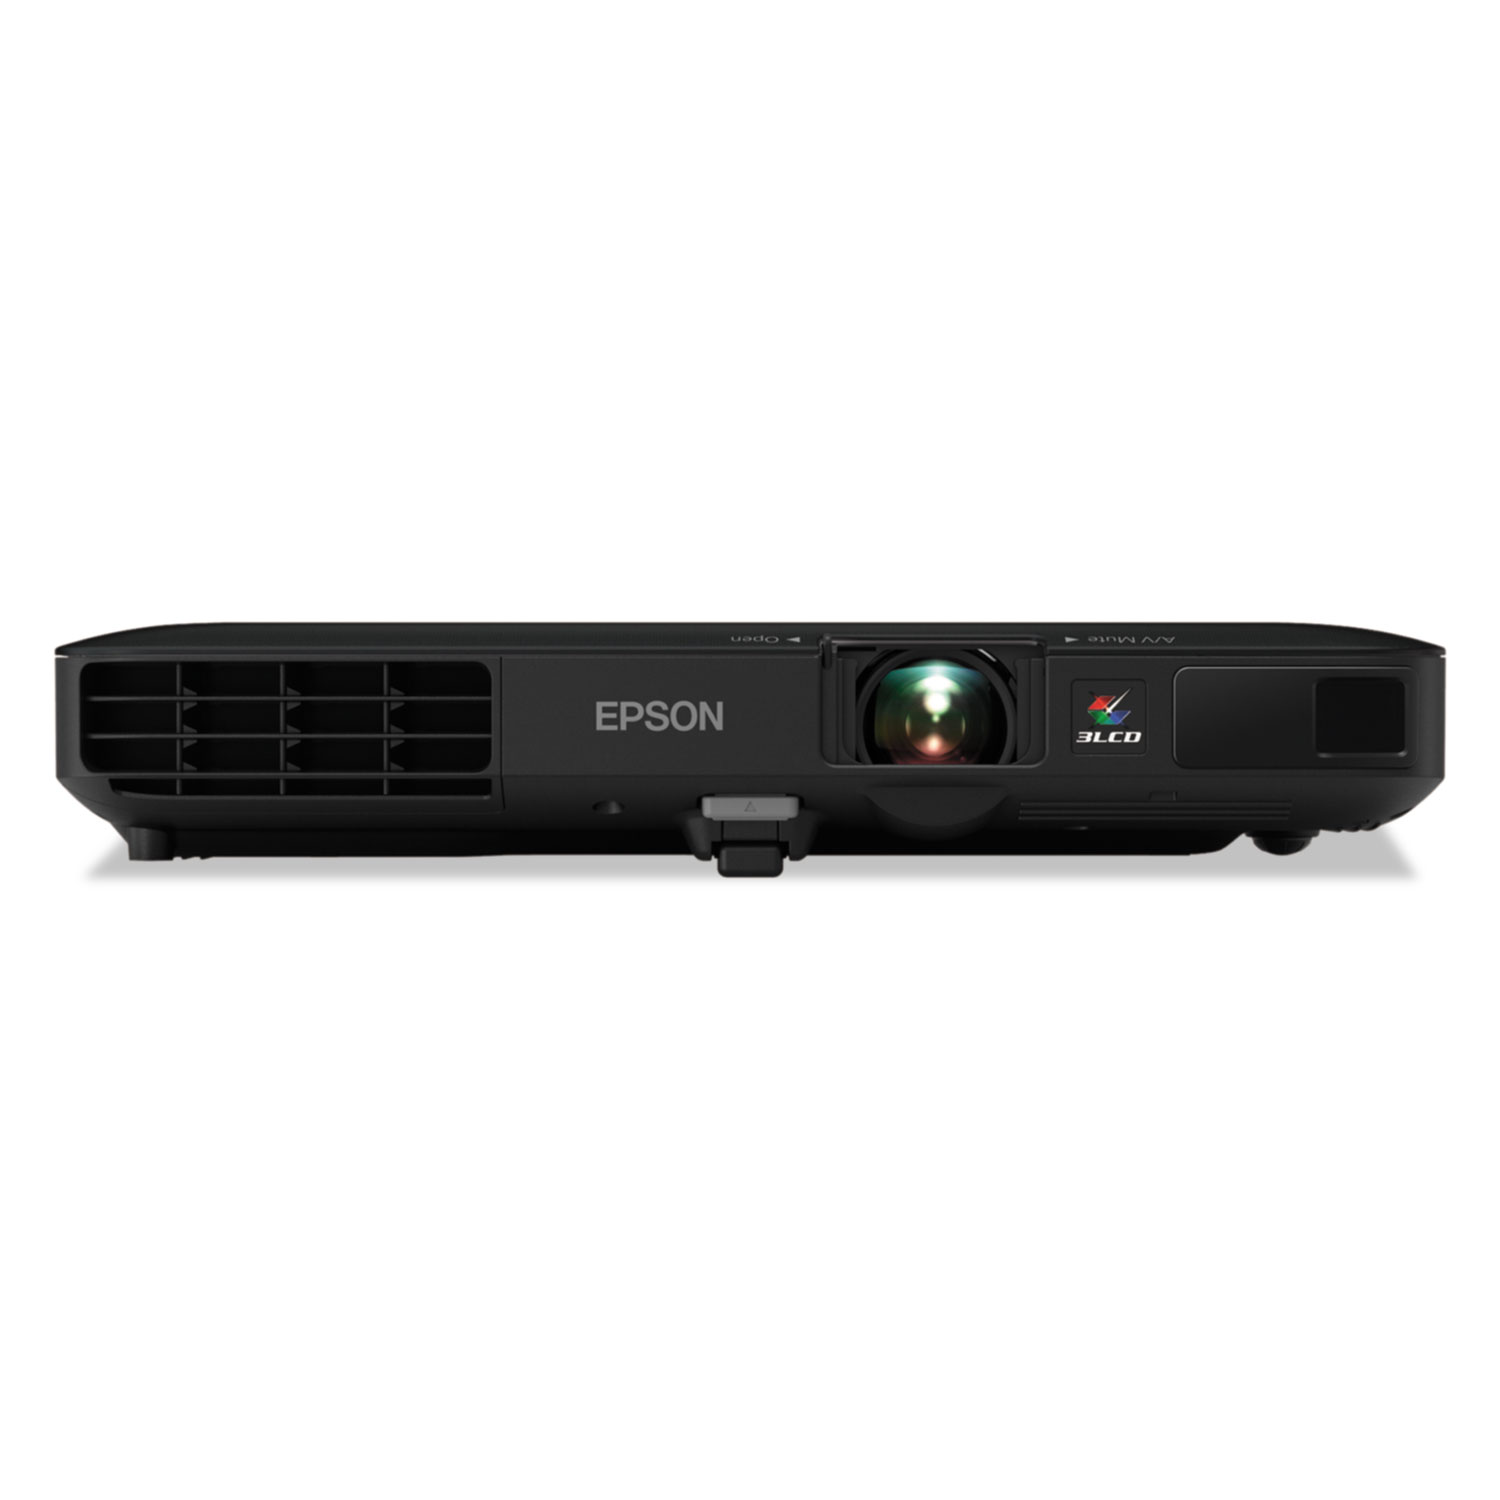  Epson V11H794120 PowerLite 1781W Wireless WXGA 3LCD Projector,3200 Lm,1280 x 800 Pixels,1.2x Zoon (EPSV11H794120) 